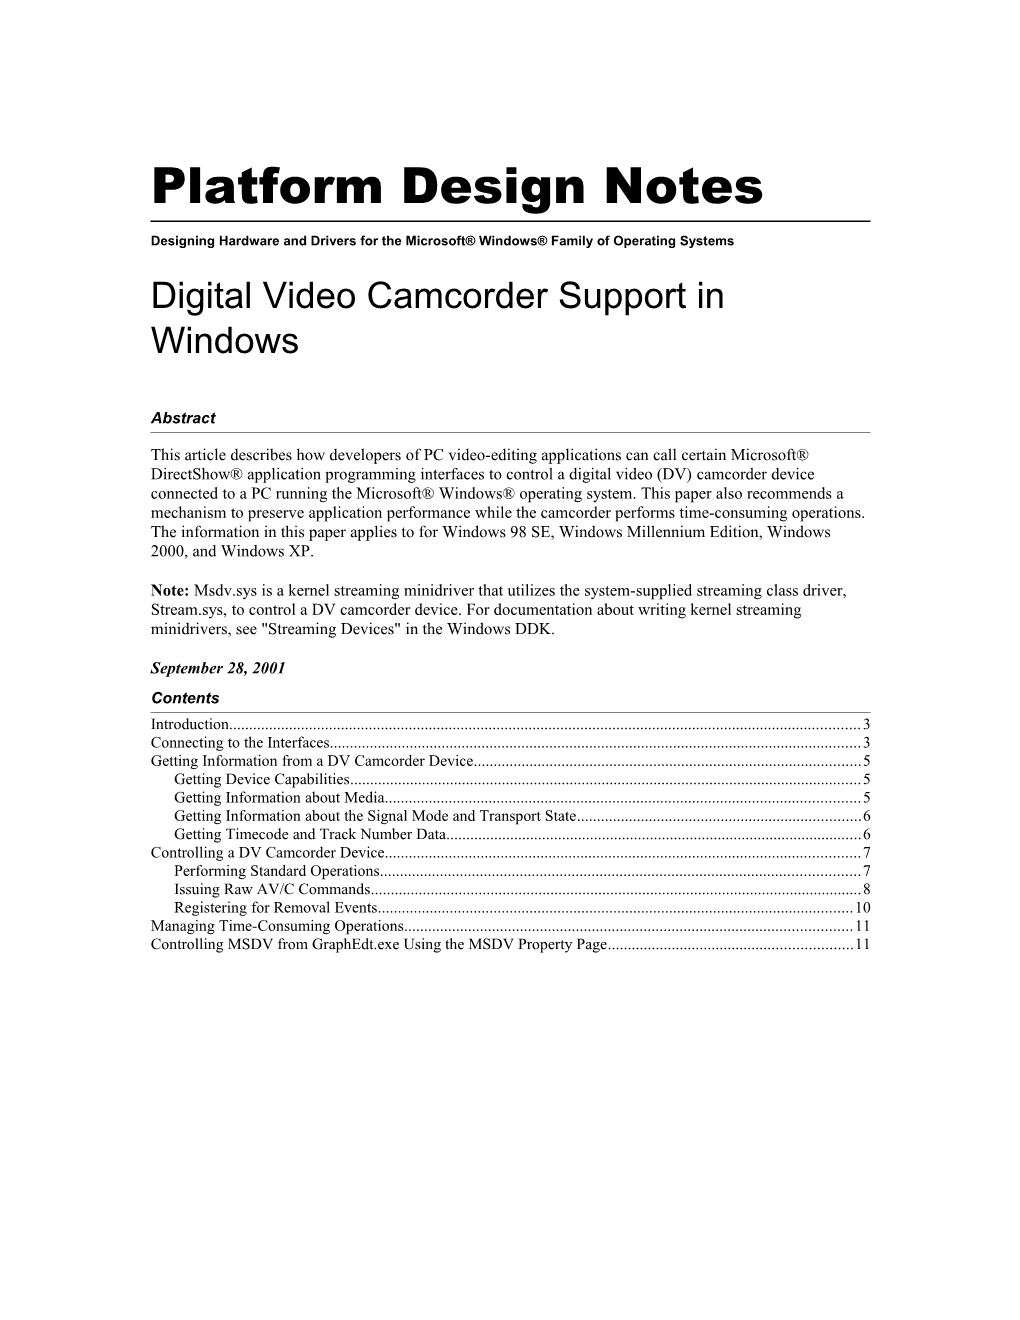 Digital Video Camcorder Support in Windows